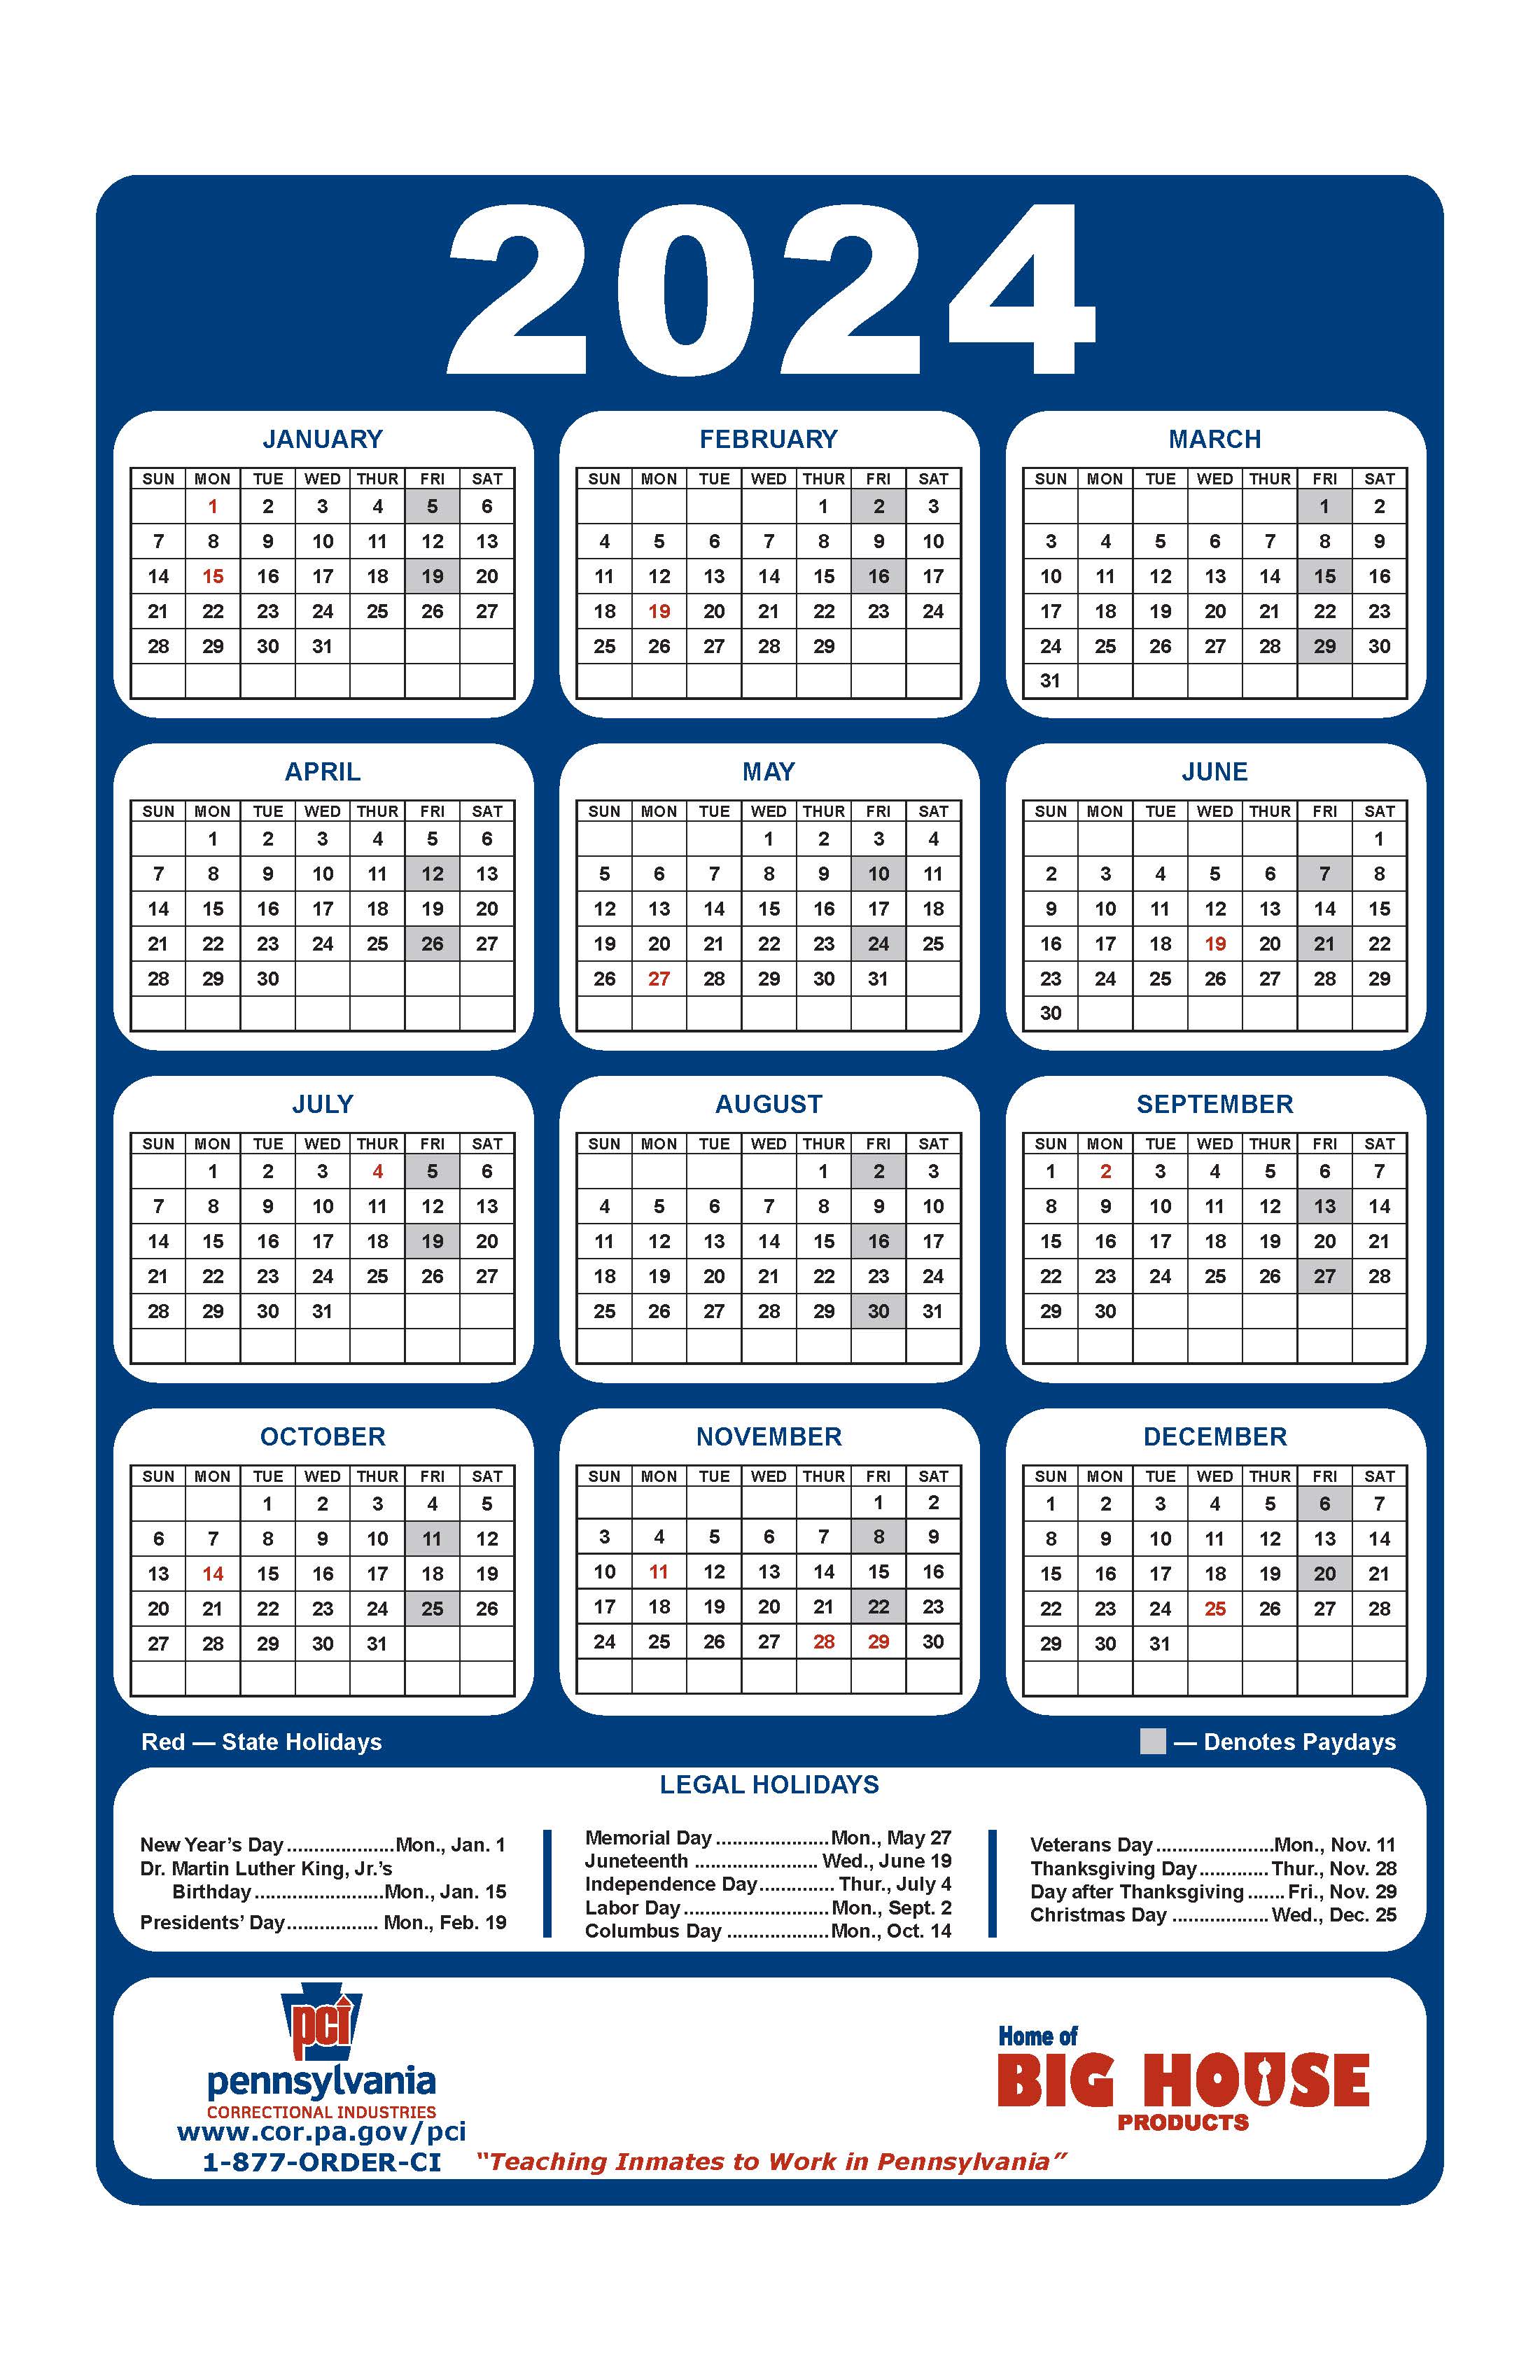 The 2024 PCI Calendar